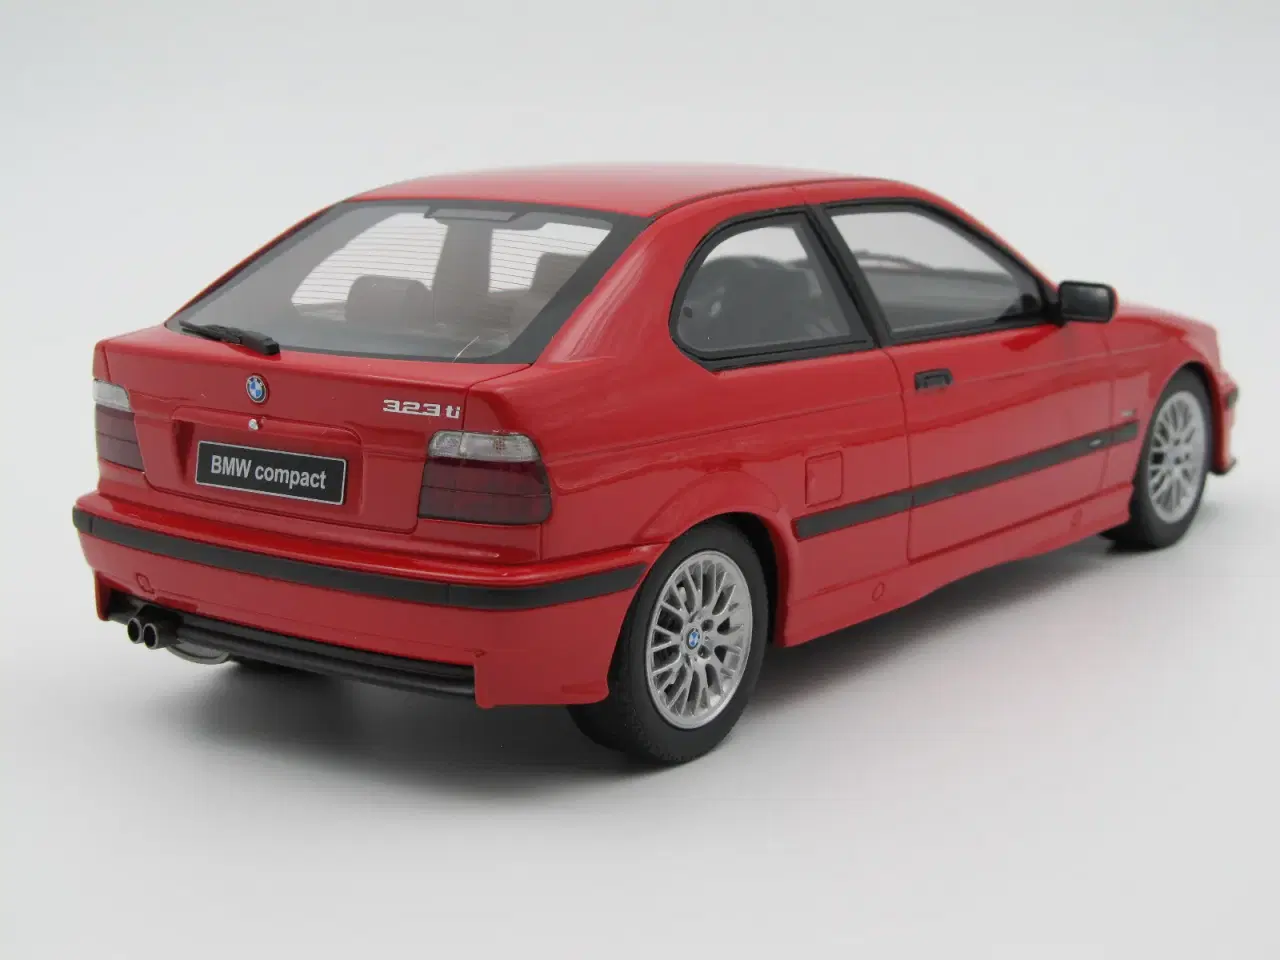 Billede 3 - 1998 BMW 323i M-Pack Compact E36 - 1:18